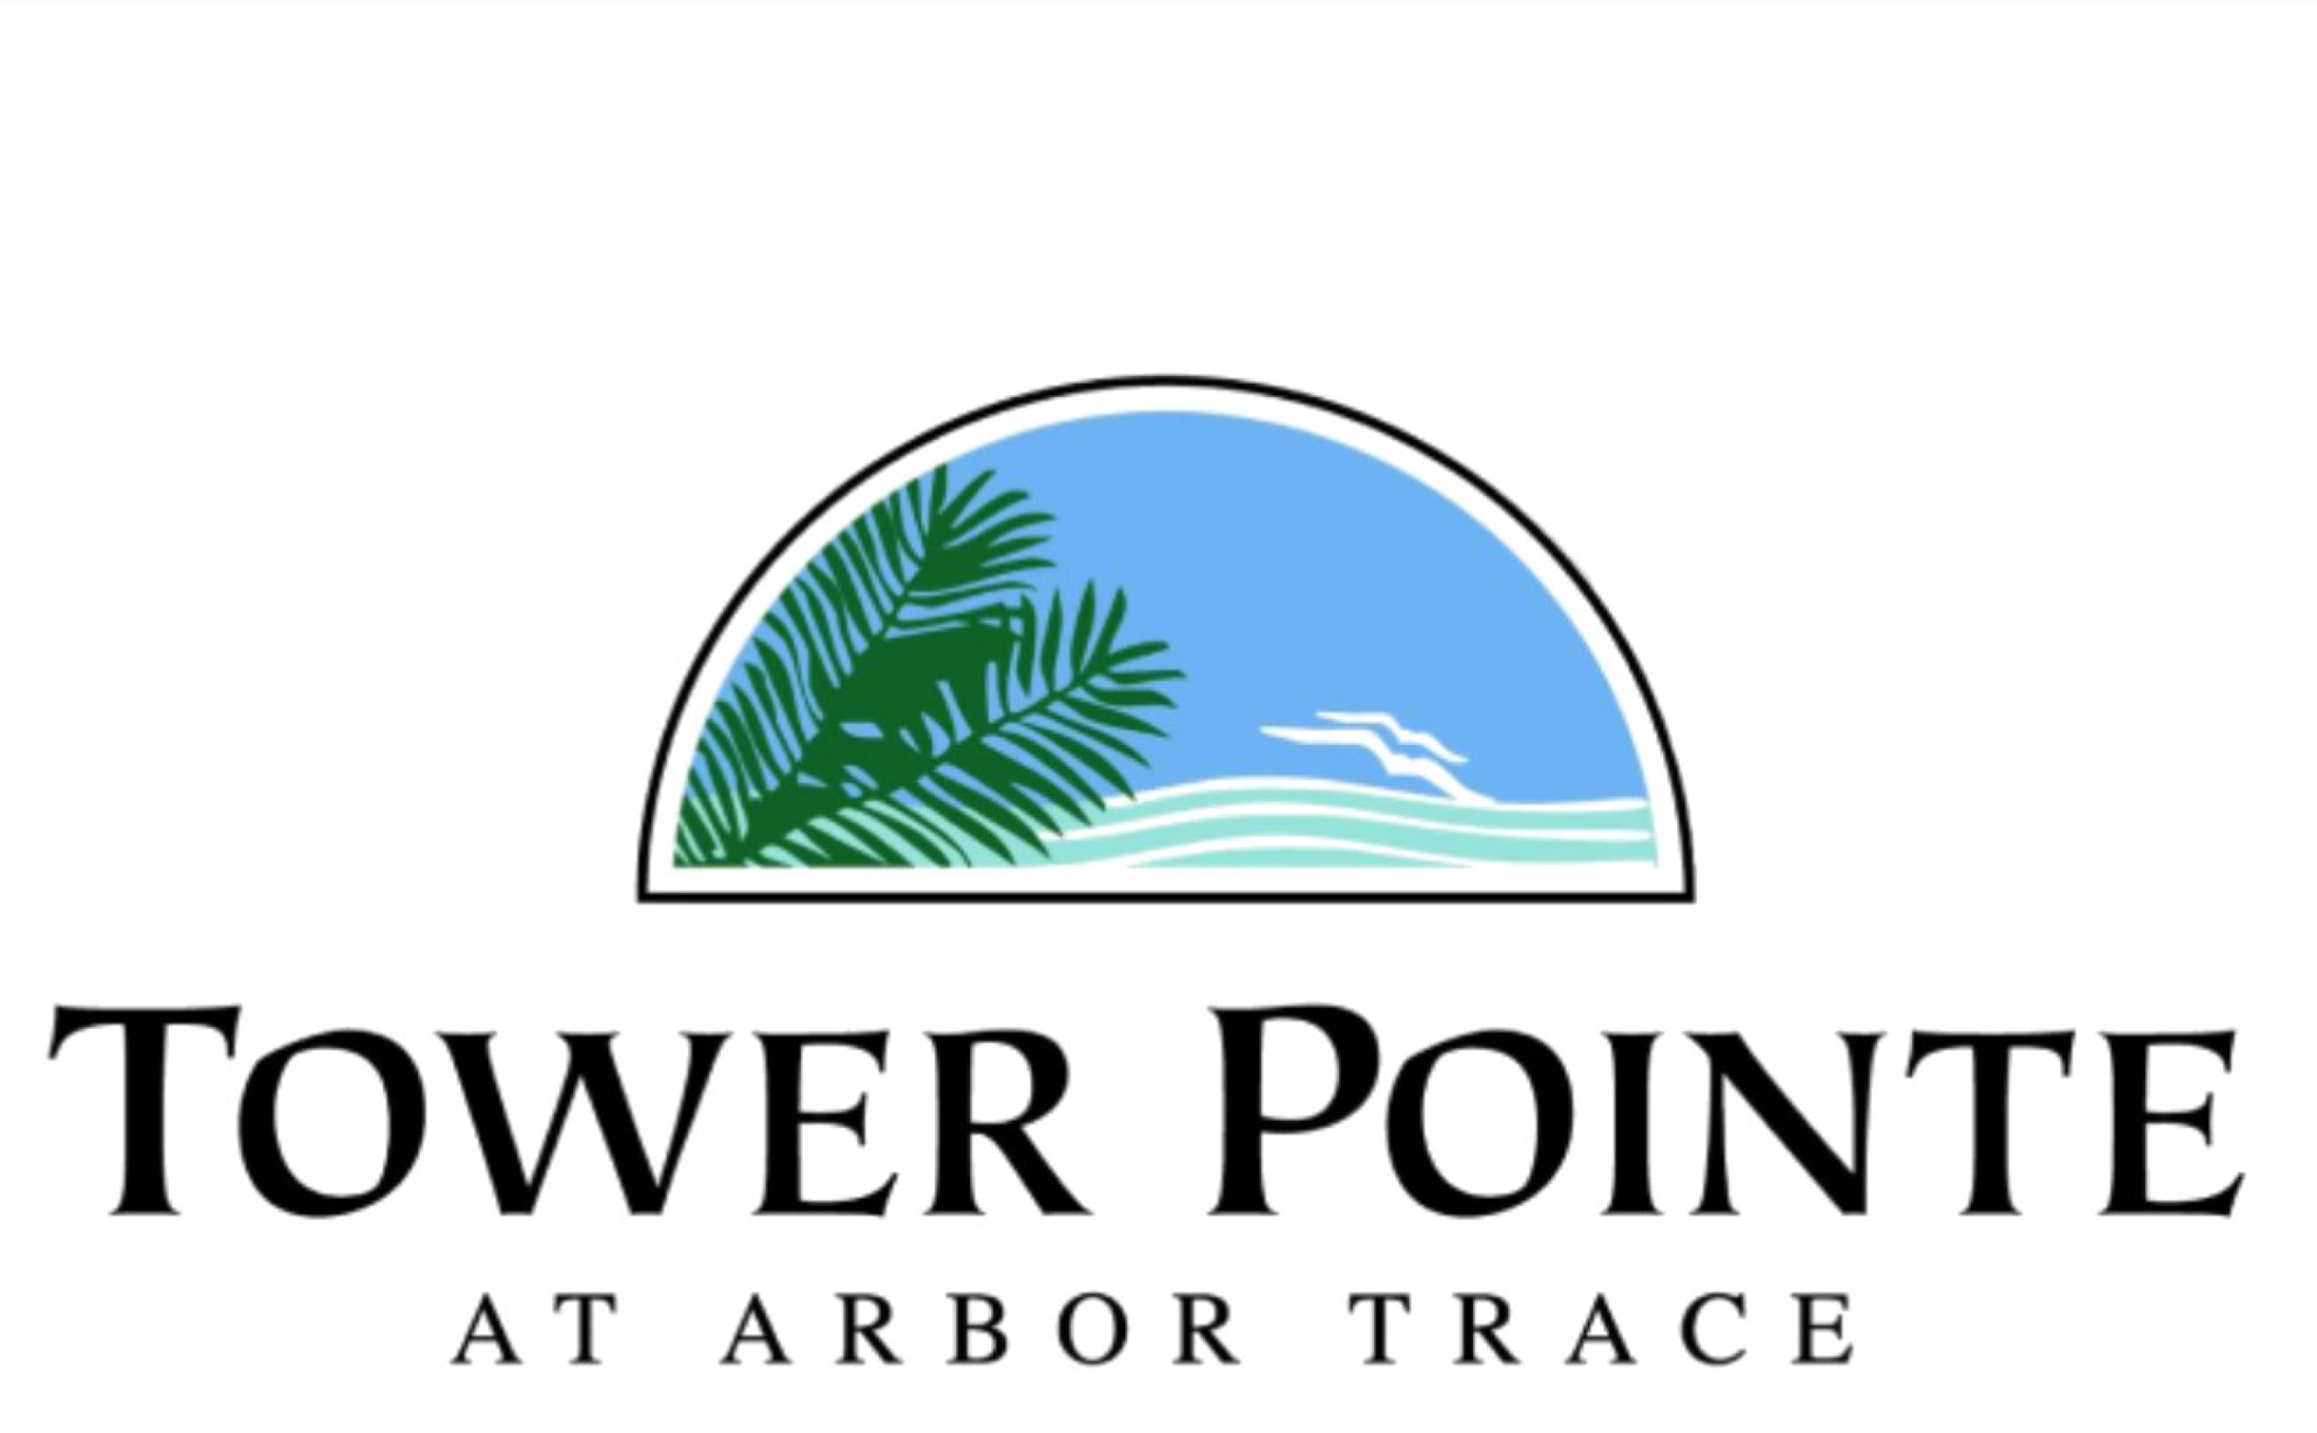 Tower Pointe Condominium Board Meeting